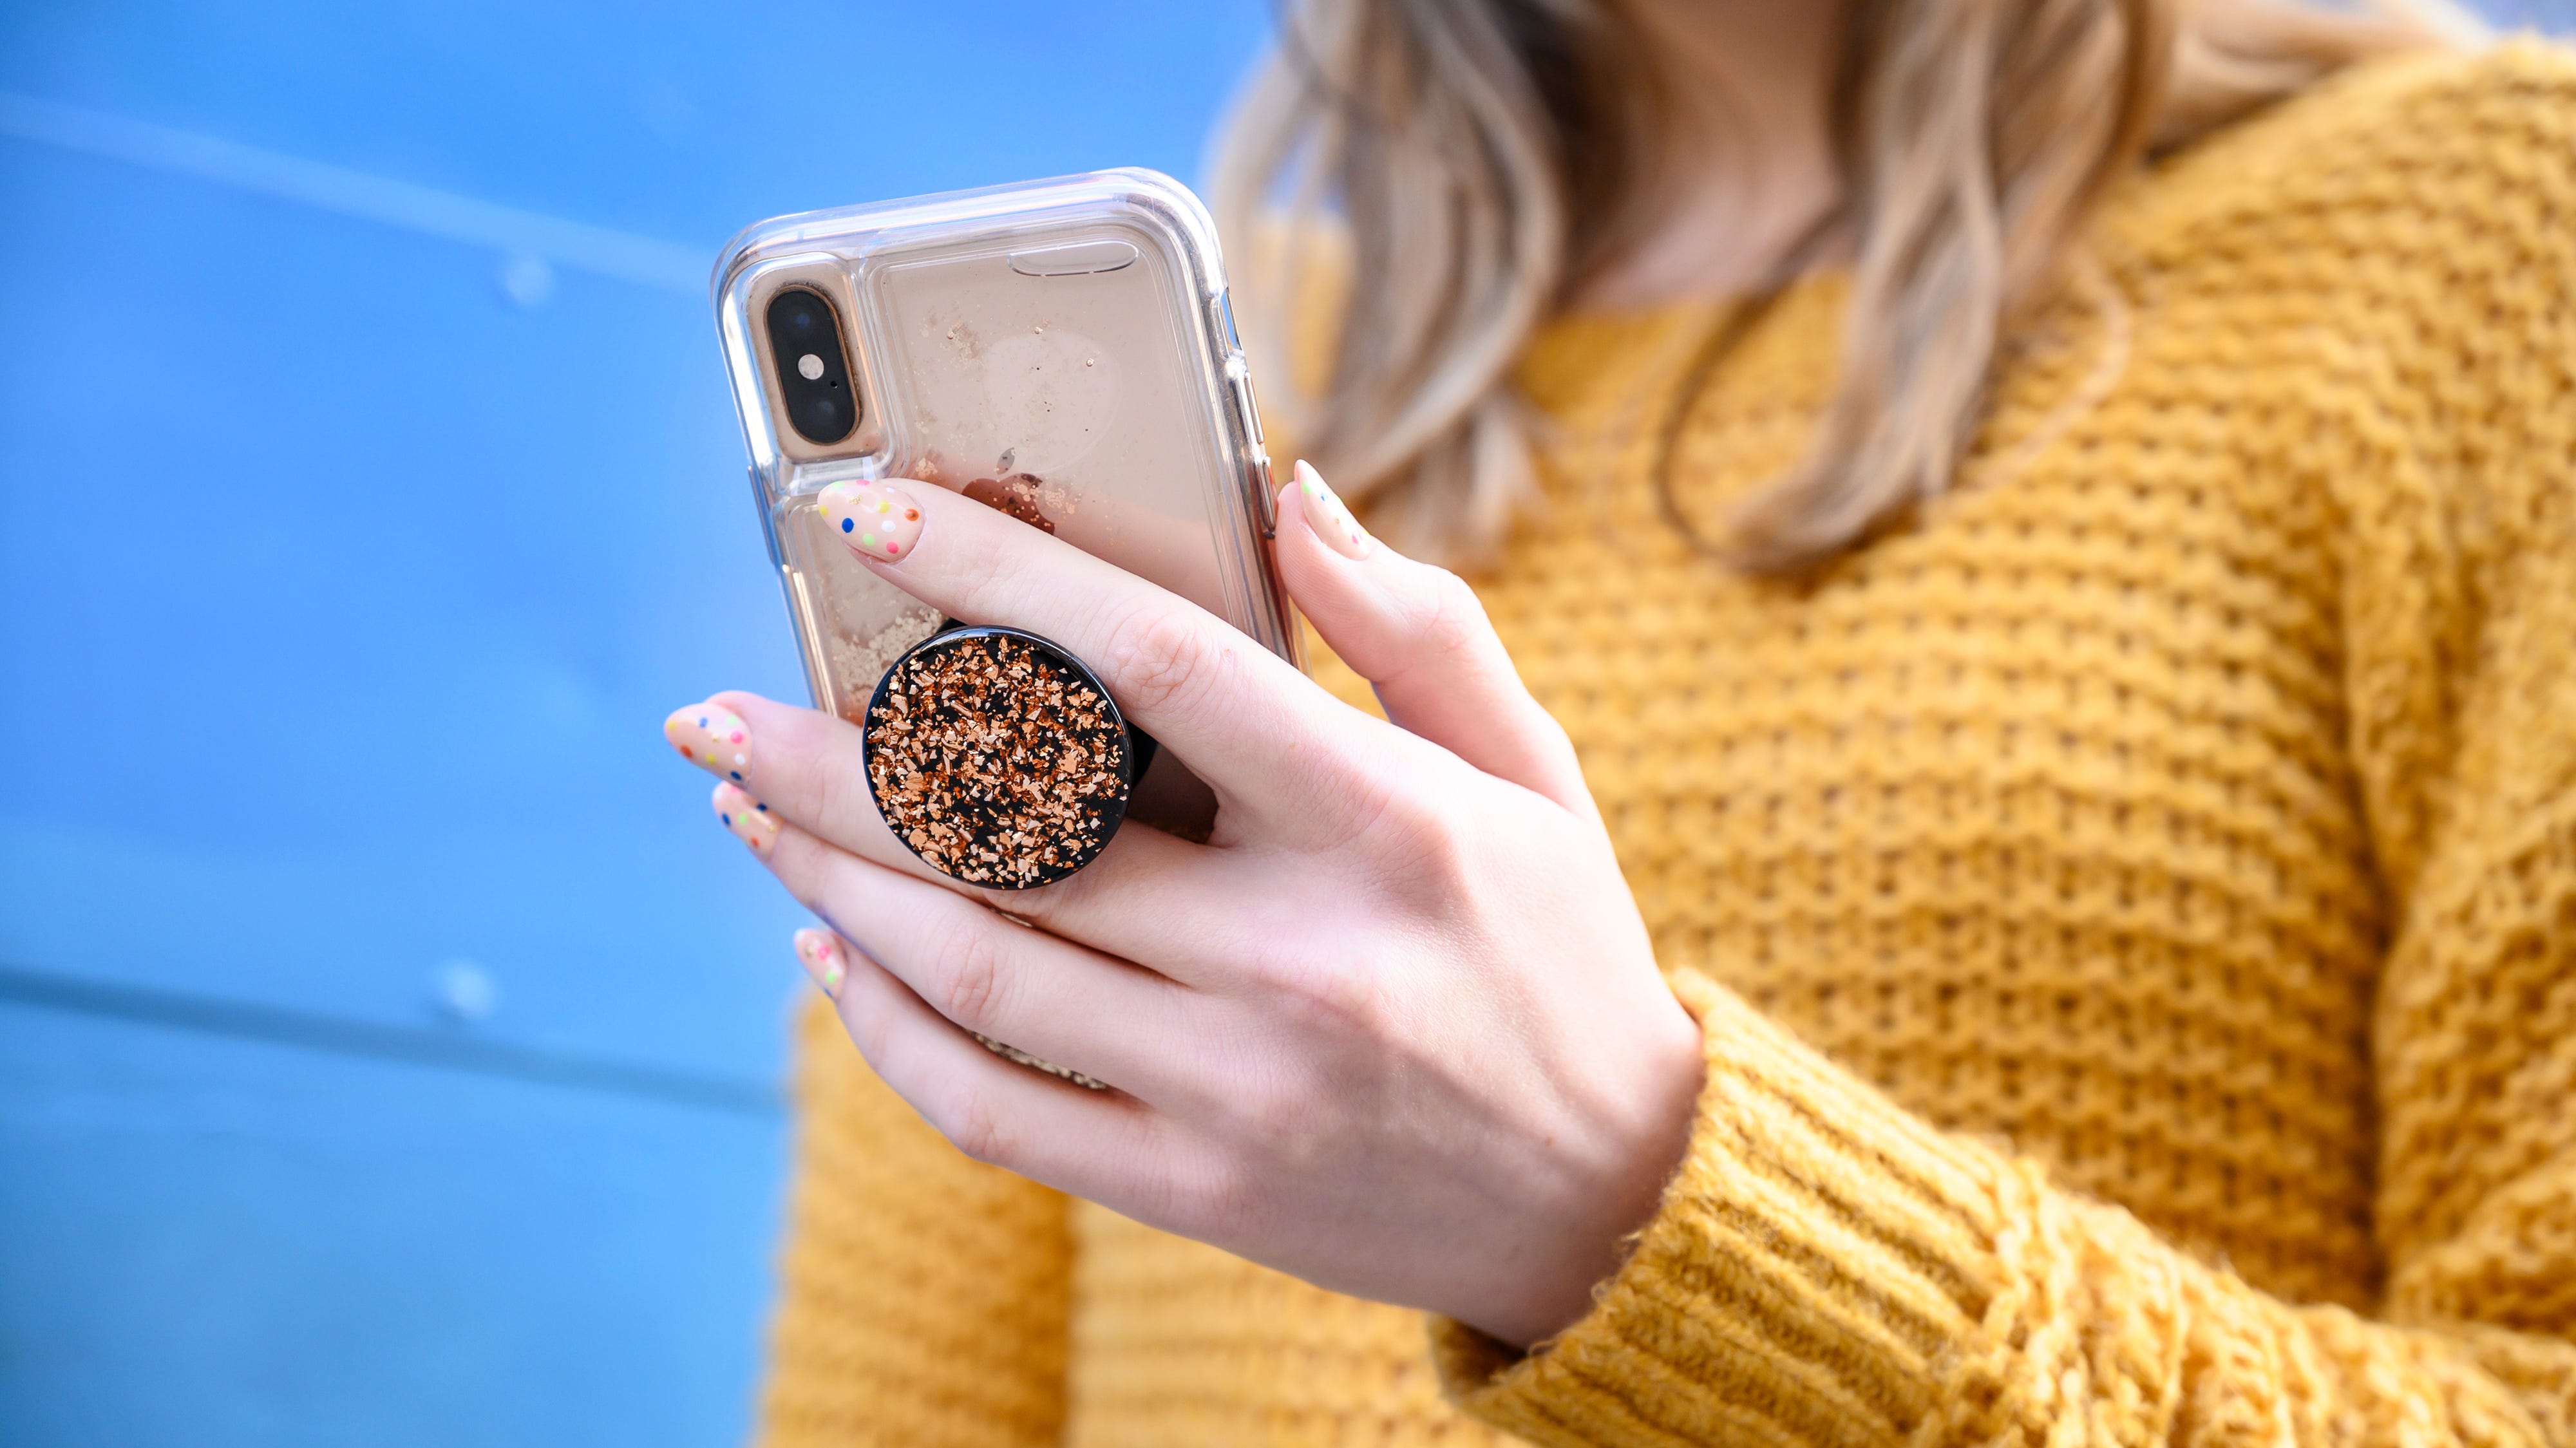 taxa for ikke at nævne Overfladisk PopSocket: Get our favorite phone grip models for less right now